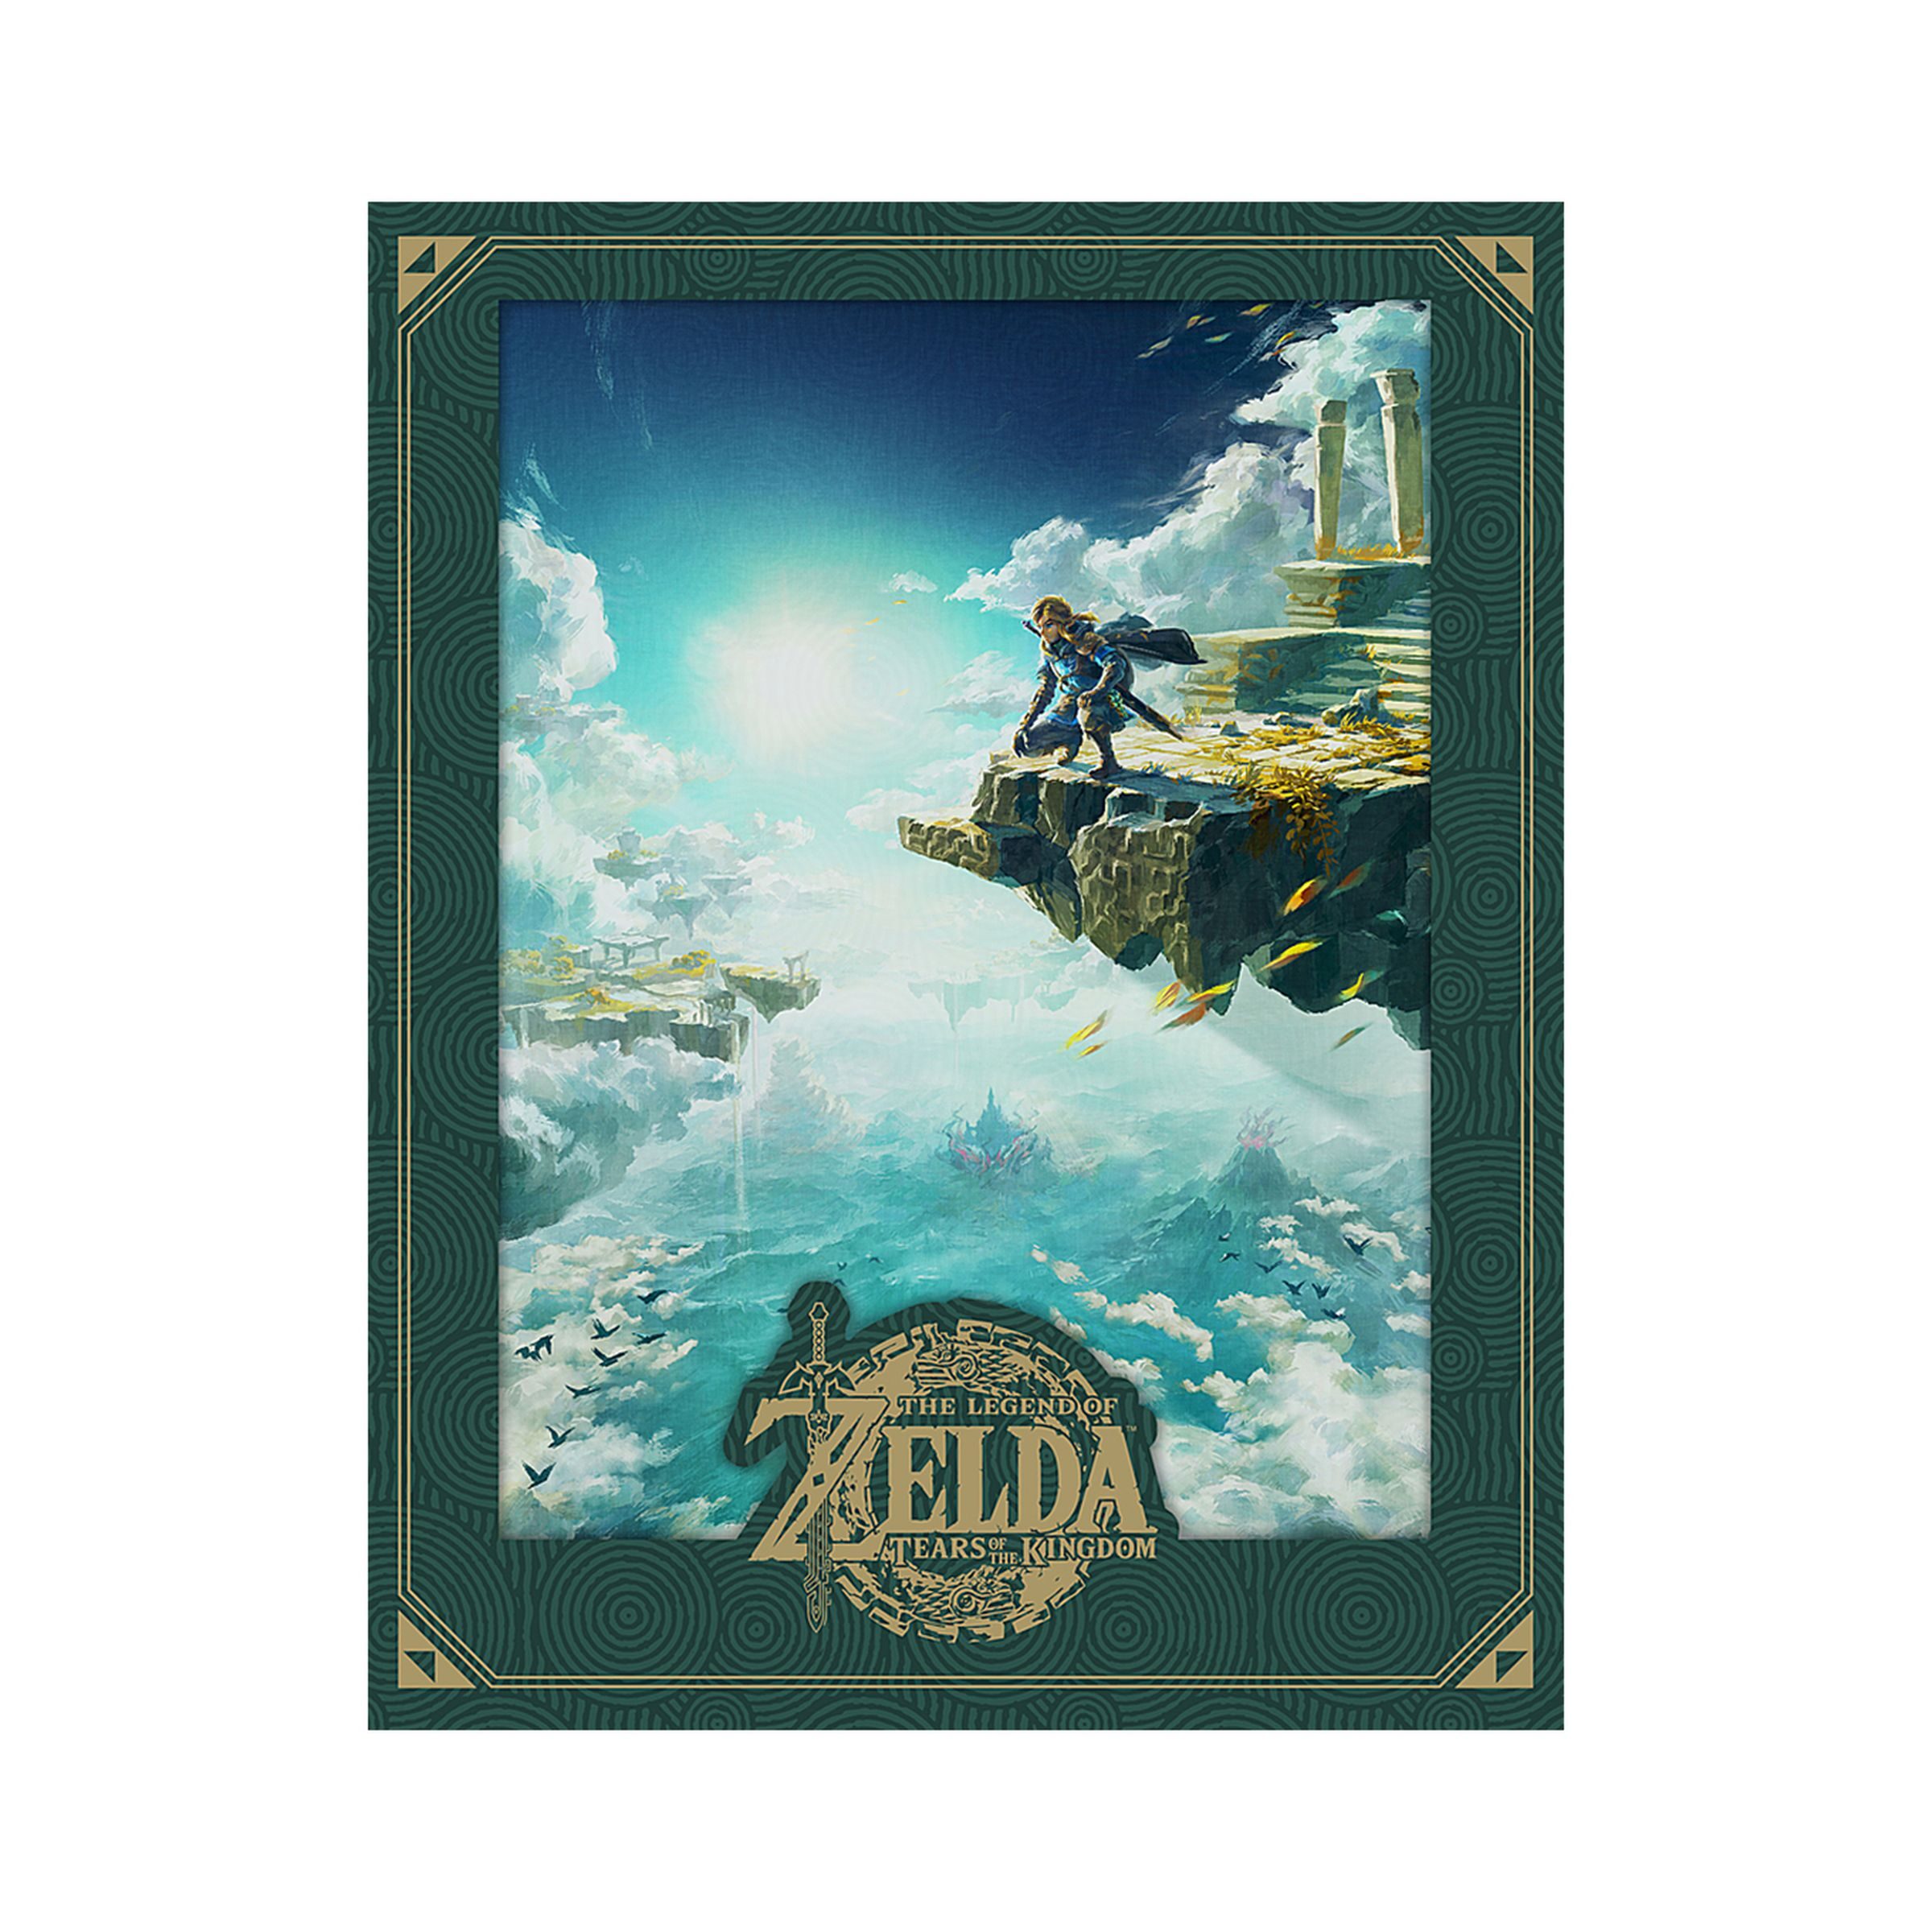 The Legend of Zelda: Tears of the Kingdom preorder guide